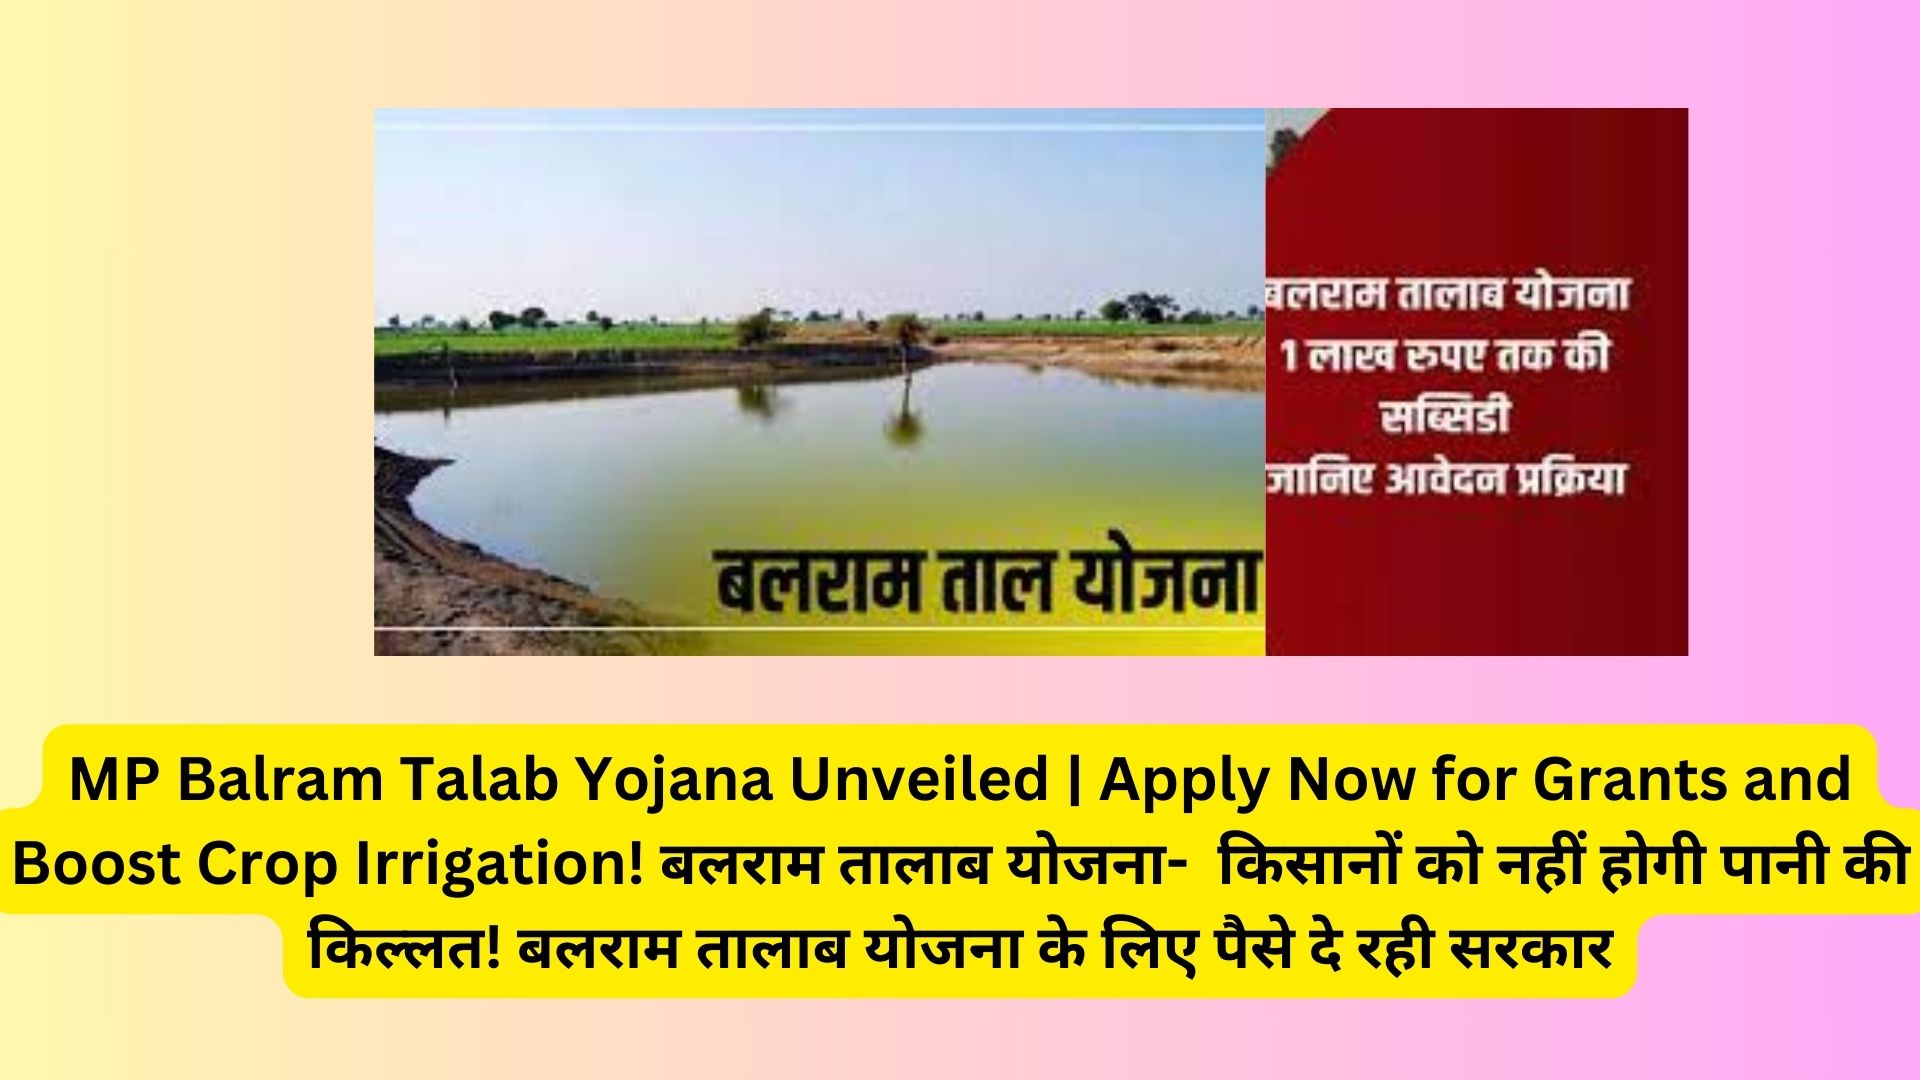 MP Balram Talab Yojana Unveiled | Apply Now for Grants and Boost Crop Irrigation! बलराम तालाब योजना- किसानों को नहीं होगी पानी की किल्लत! बलराम तालाब योजना के लिए पैसे दे रही सरकार